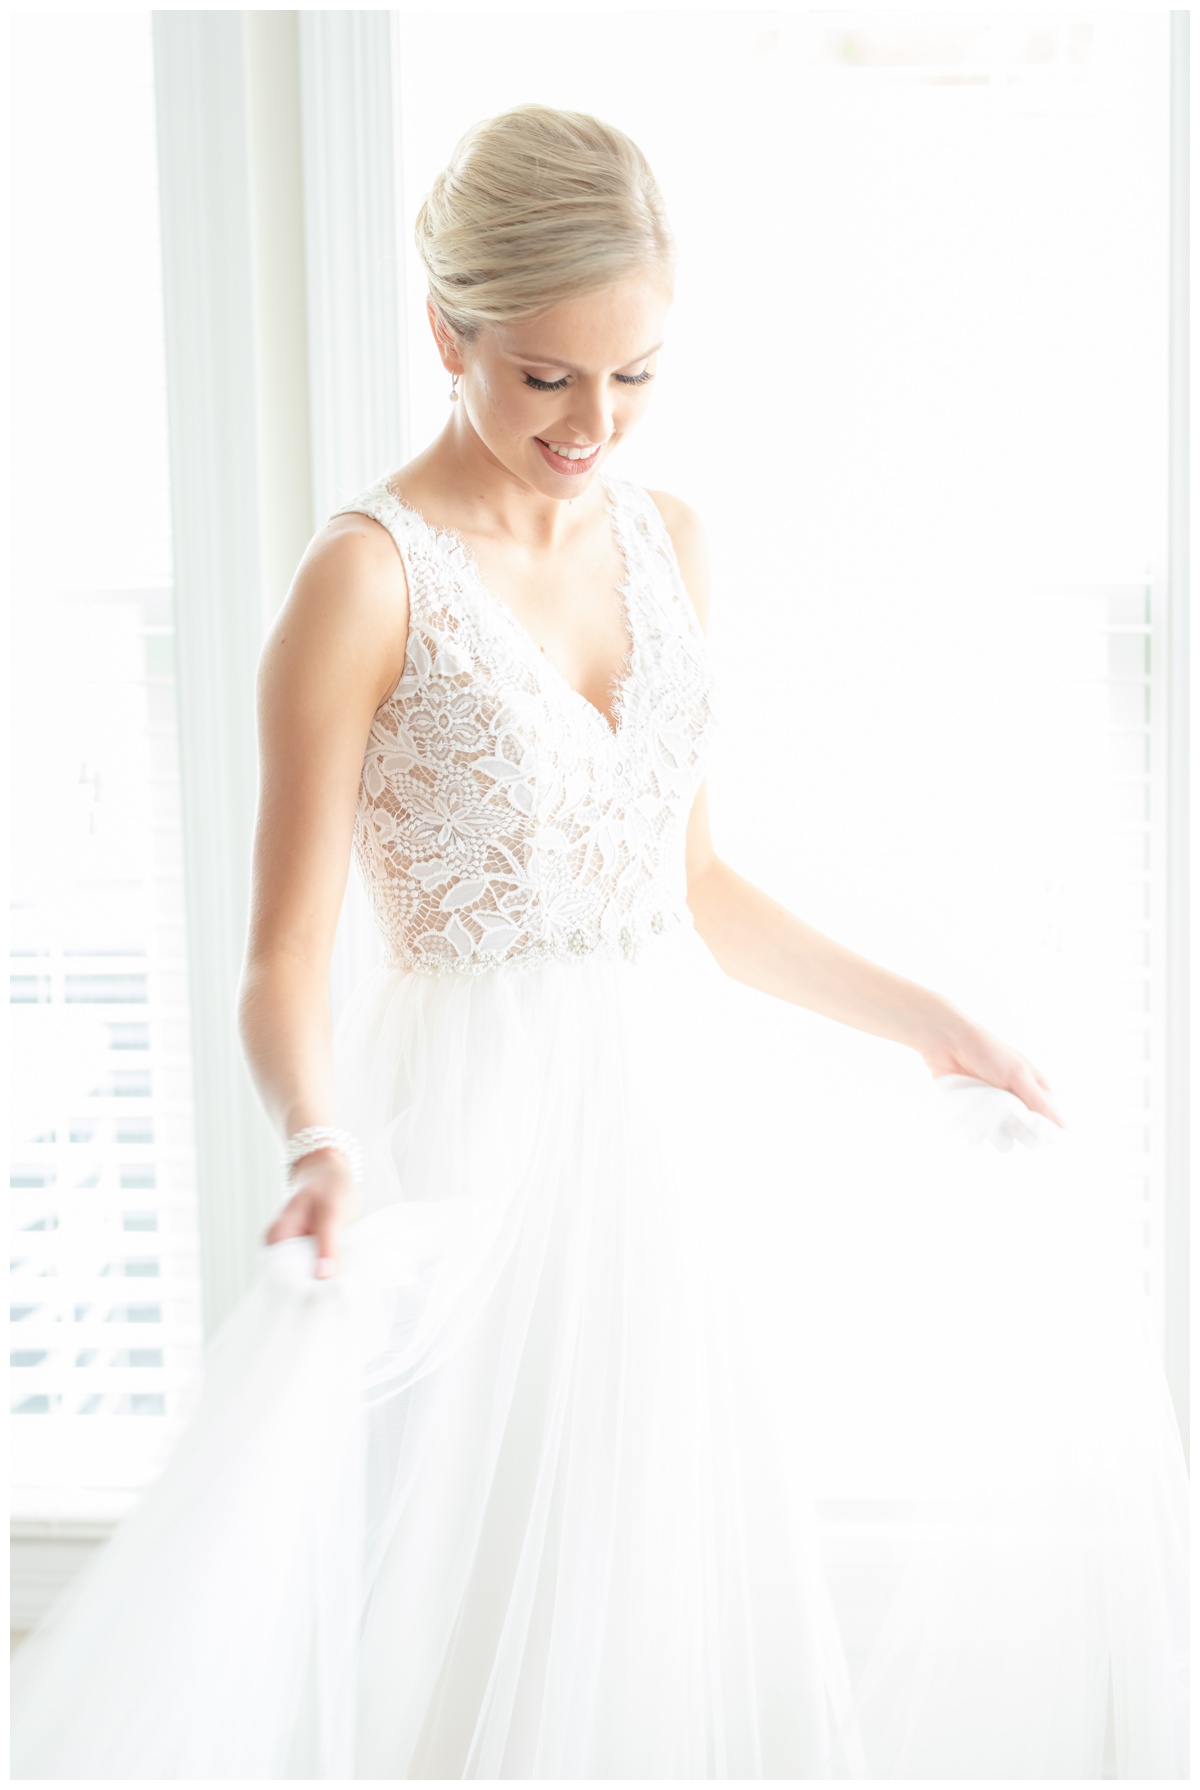 bride twirling in wedding gown